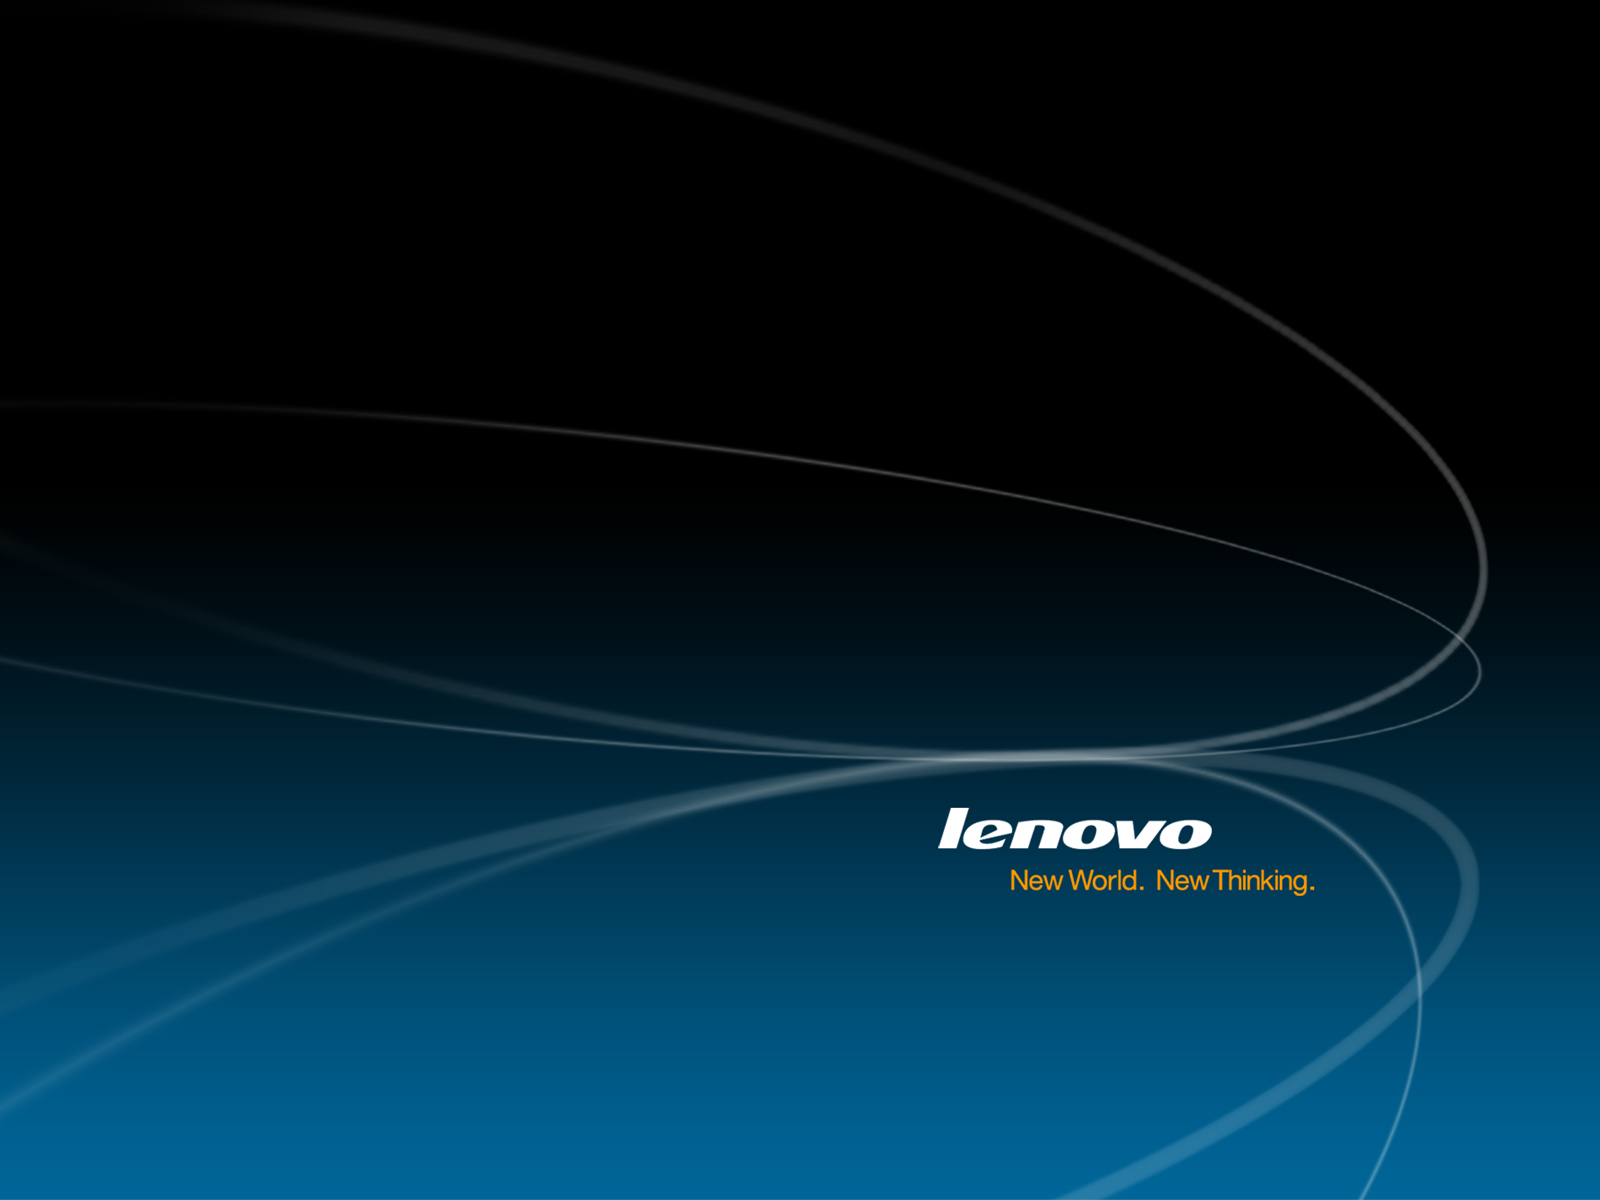 HD Wallpaper Lenovo Thinkpad X Kb Jpeg